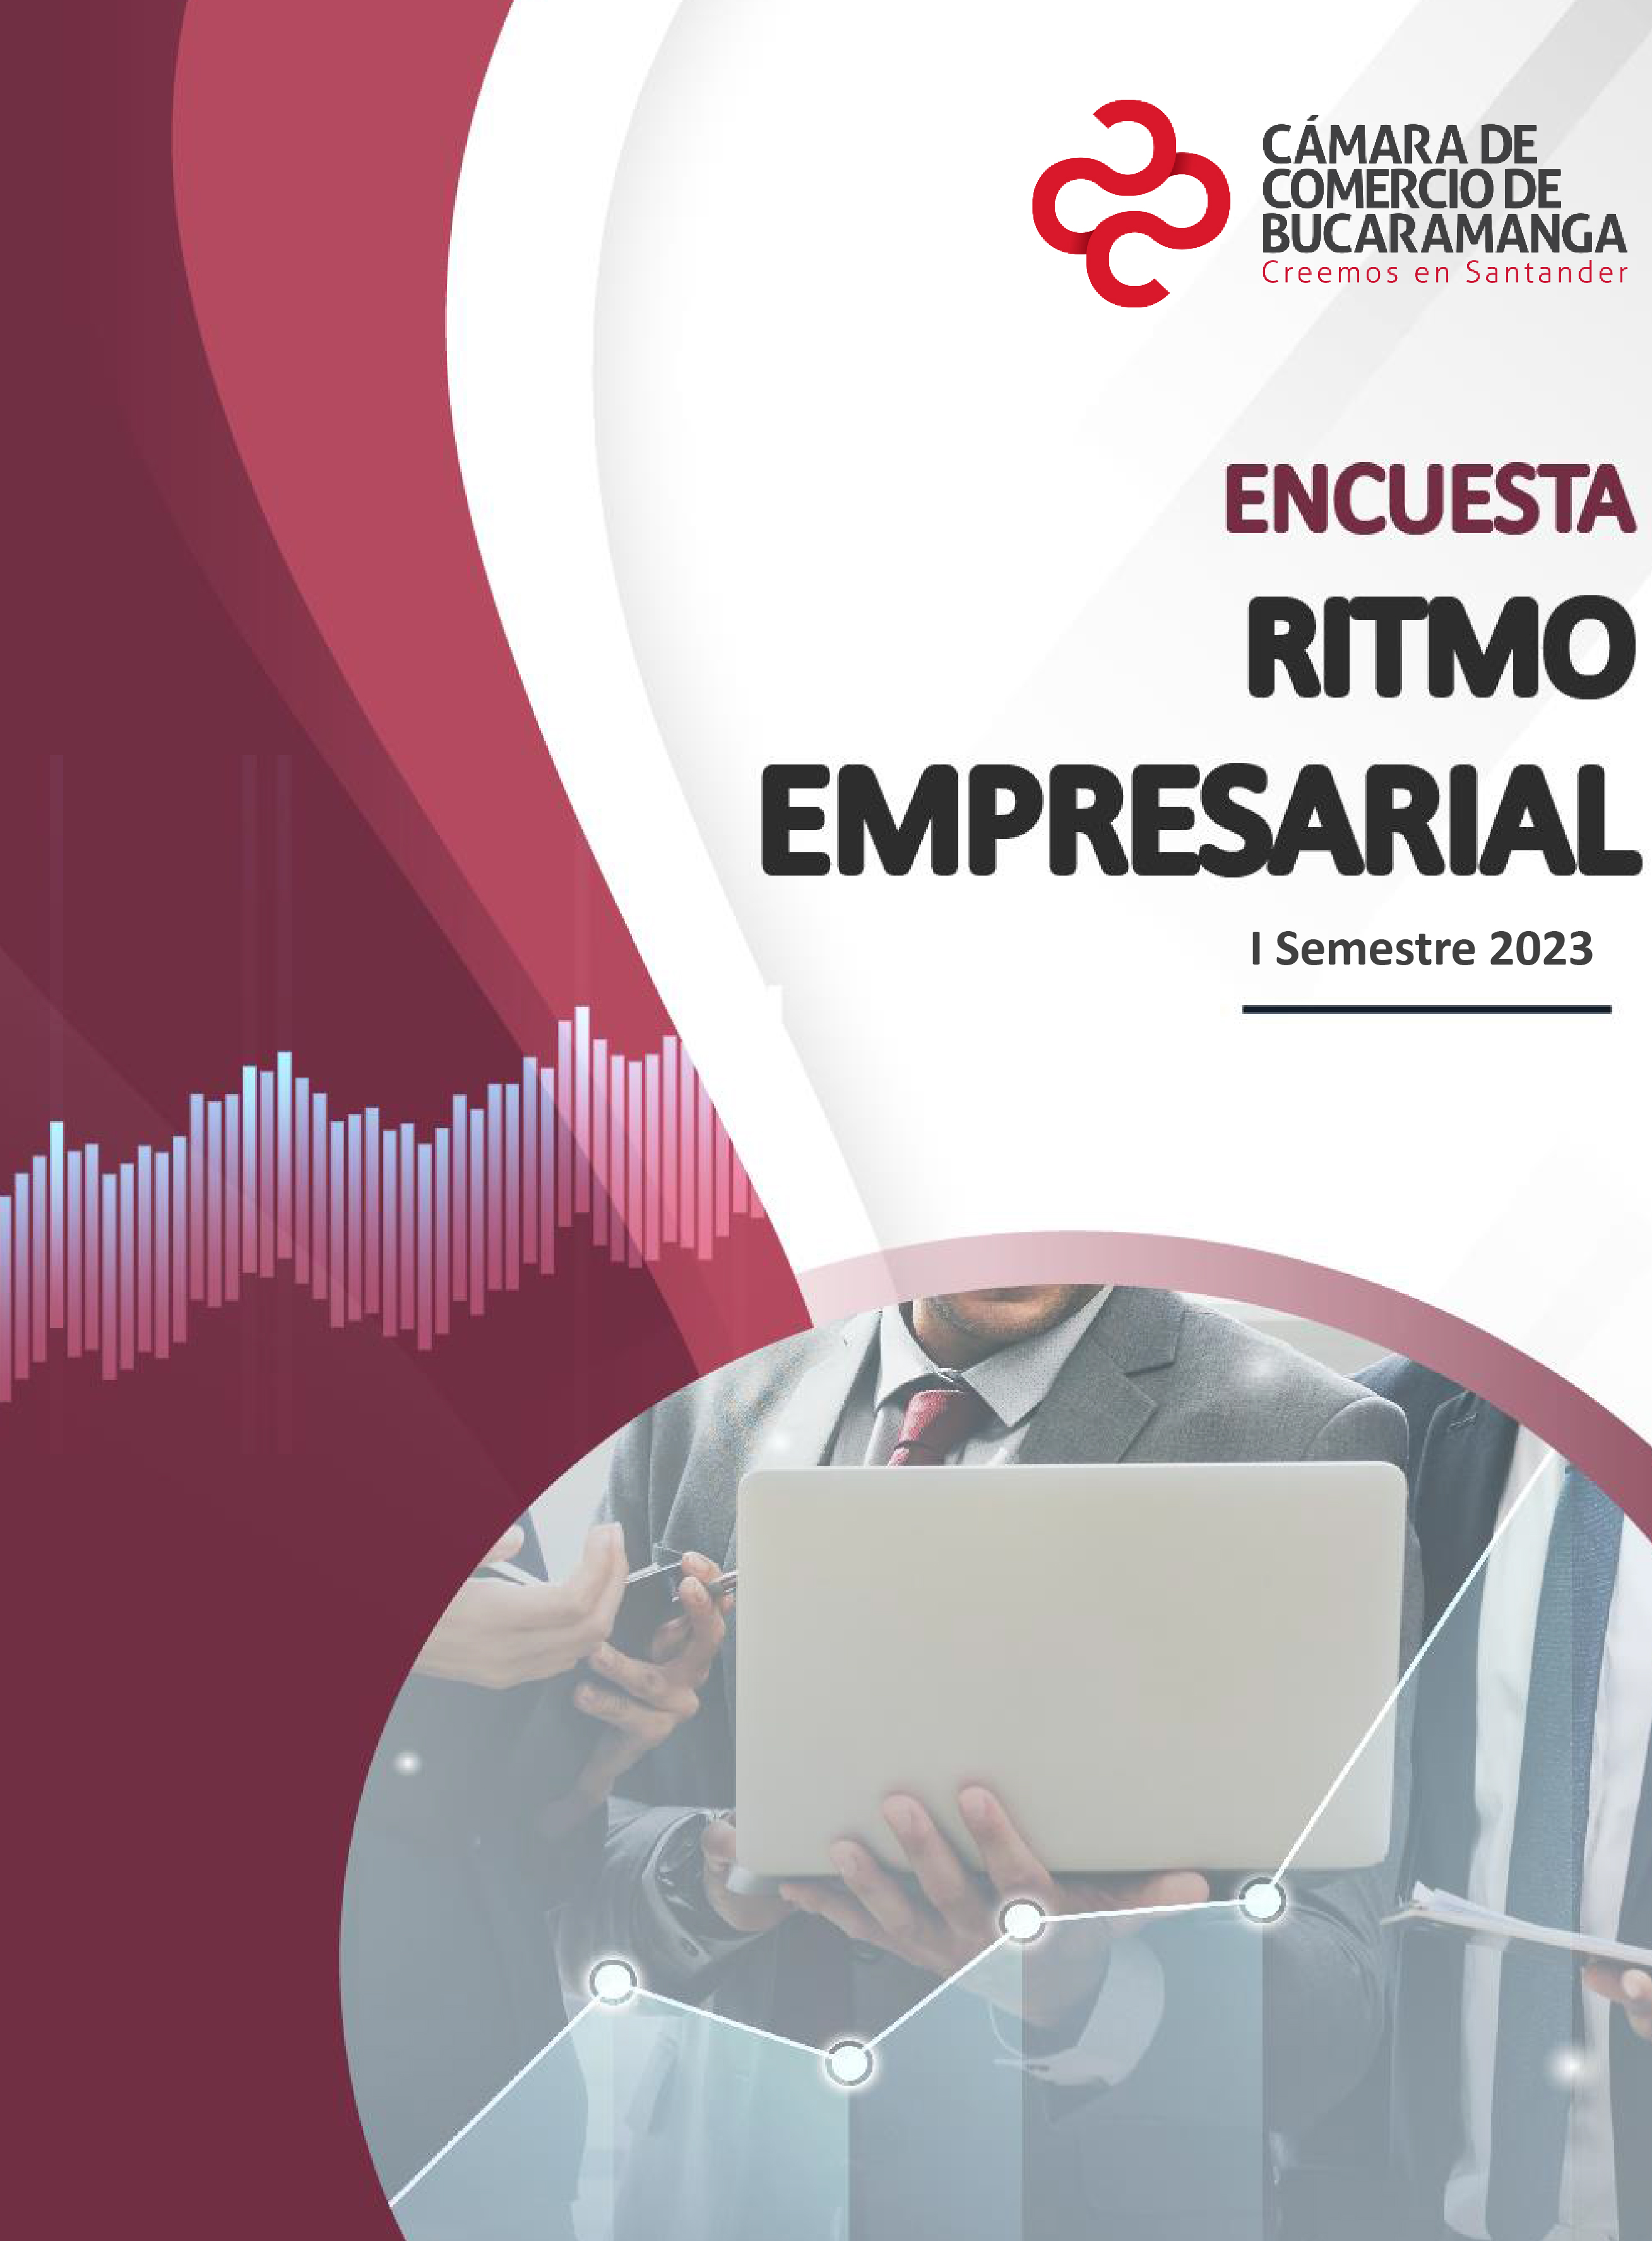 Encuesta Ritmo Empresarial Santander 2023 - I semestre